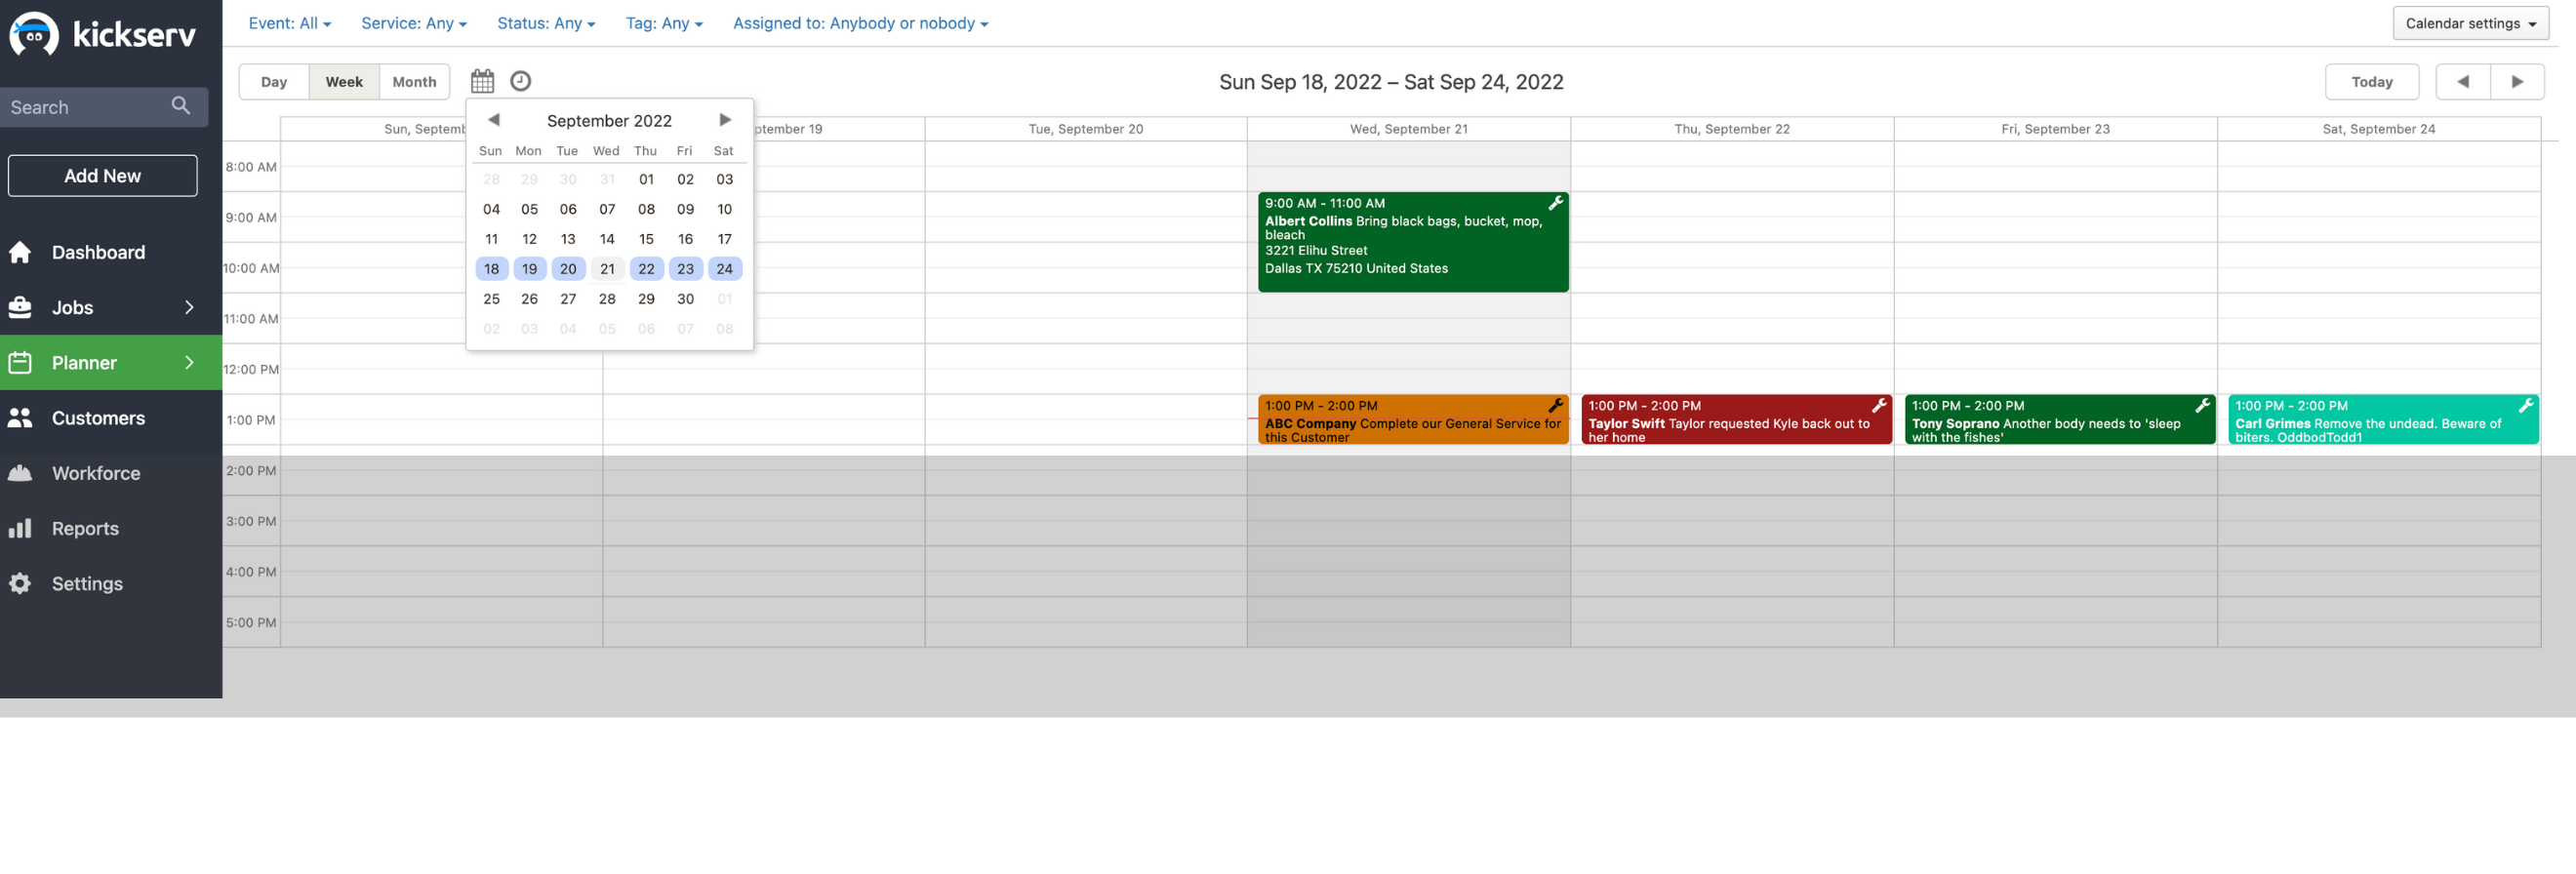 Kickserv Calendar Updates